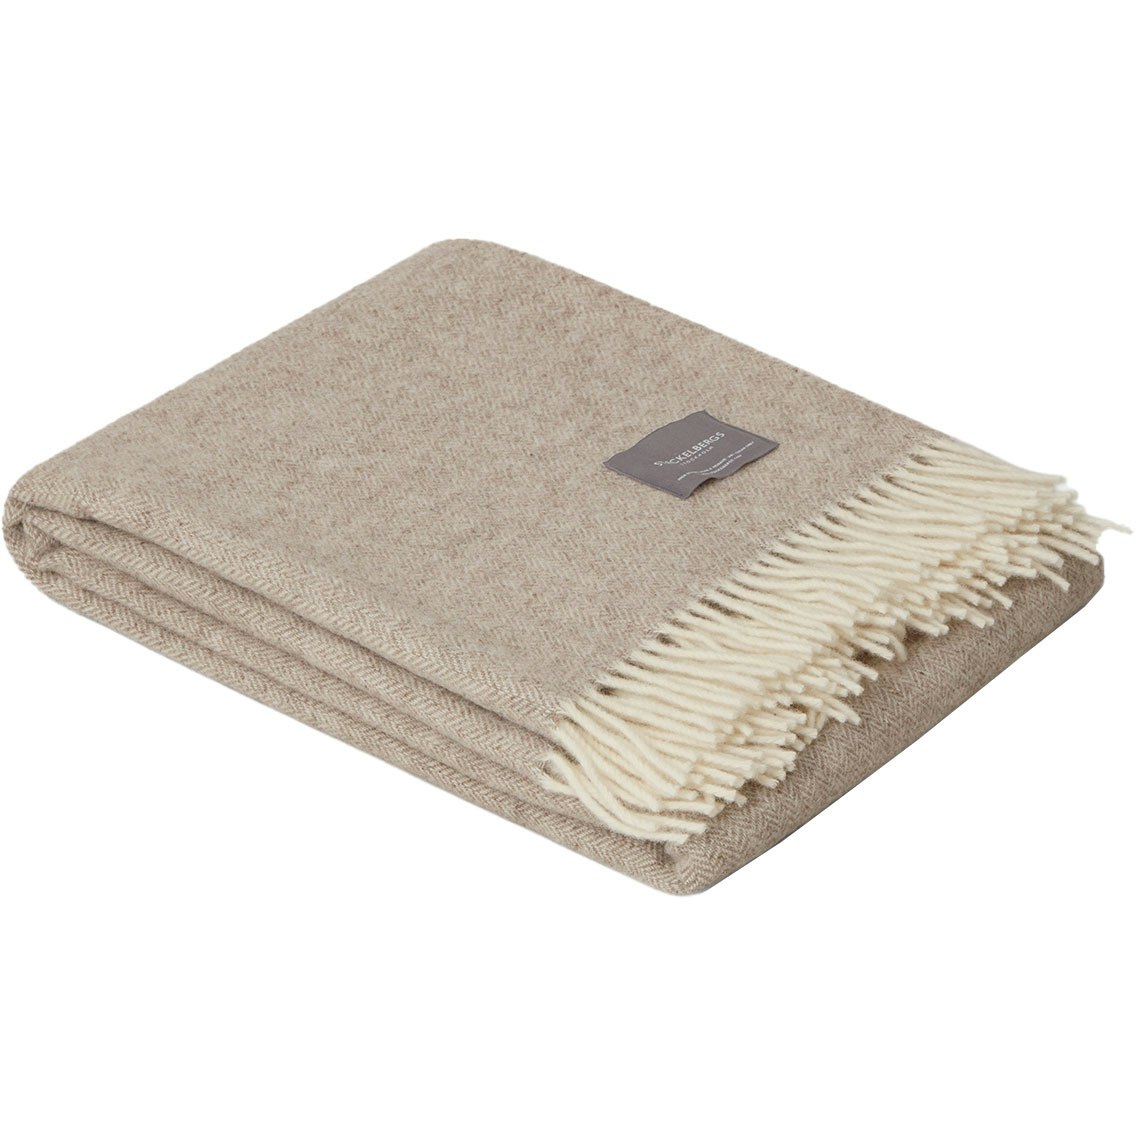 Wool Fishbone Blanket 130x170 cm, Light Taupe/Off-white